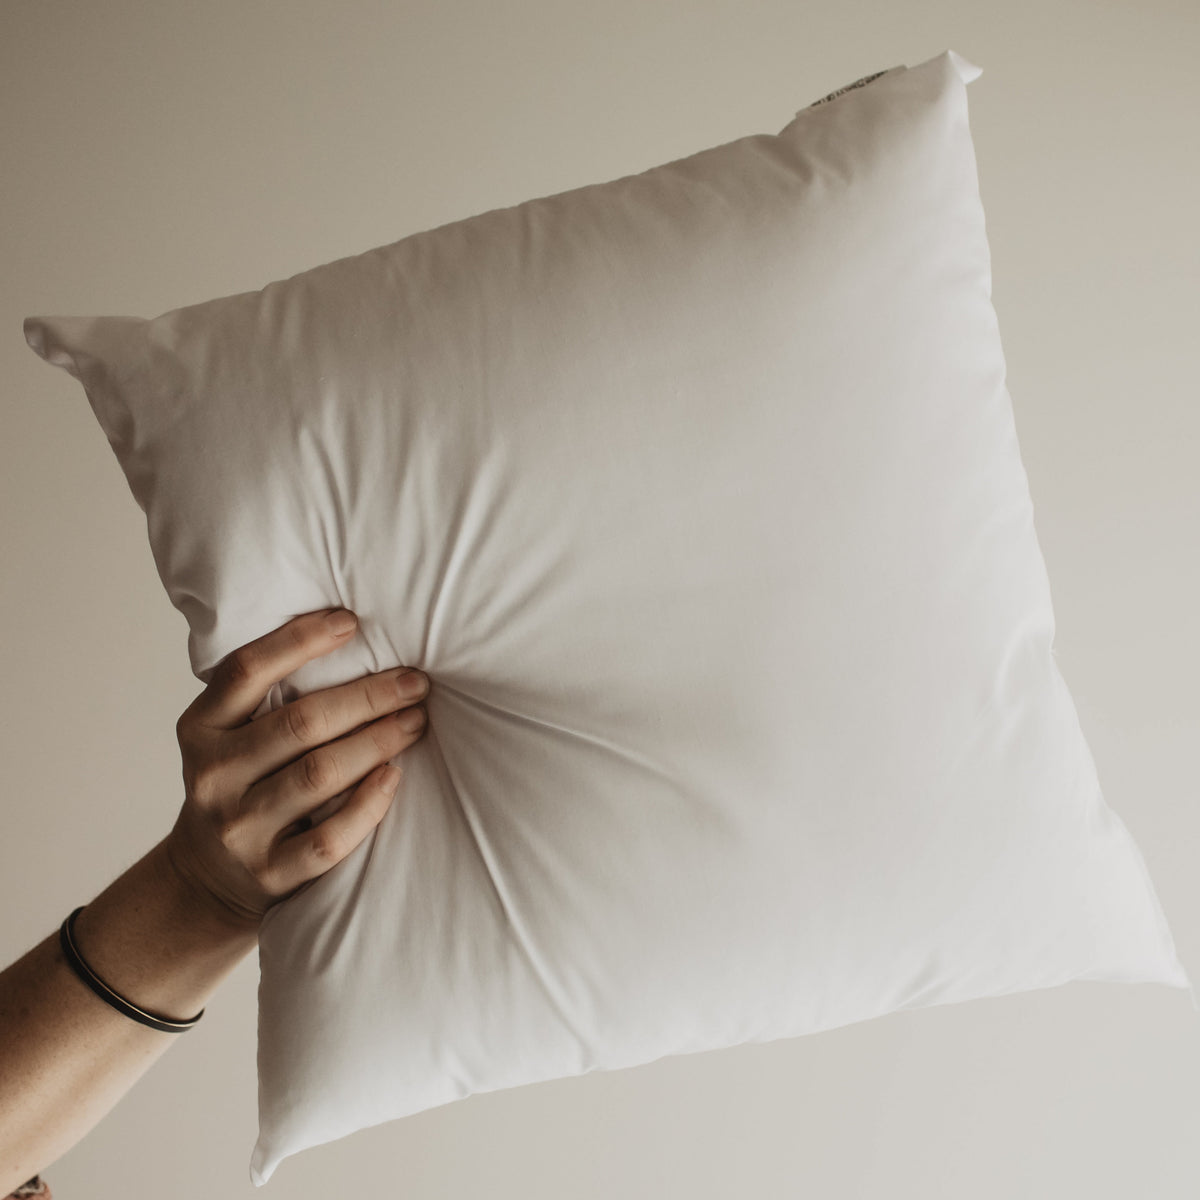 Pillow Inserts :: OUTDOOR Rectangular Woven 180TC Fabric Poly Filled  OUTDOOR Pillow Insert - UnitedPillows :: USA Made Pillows Direct From The  Manufacturer